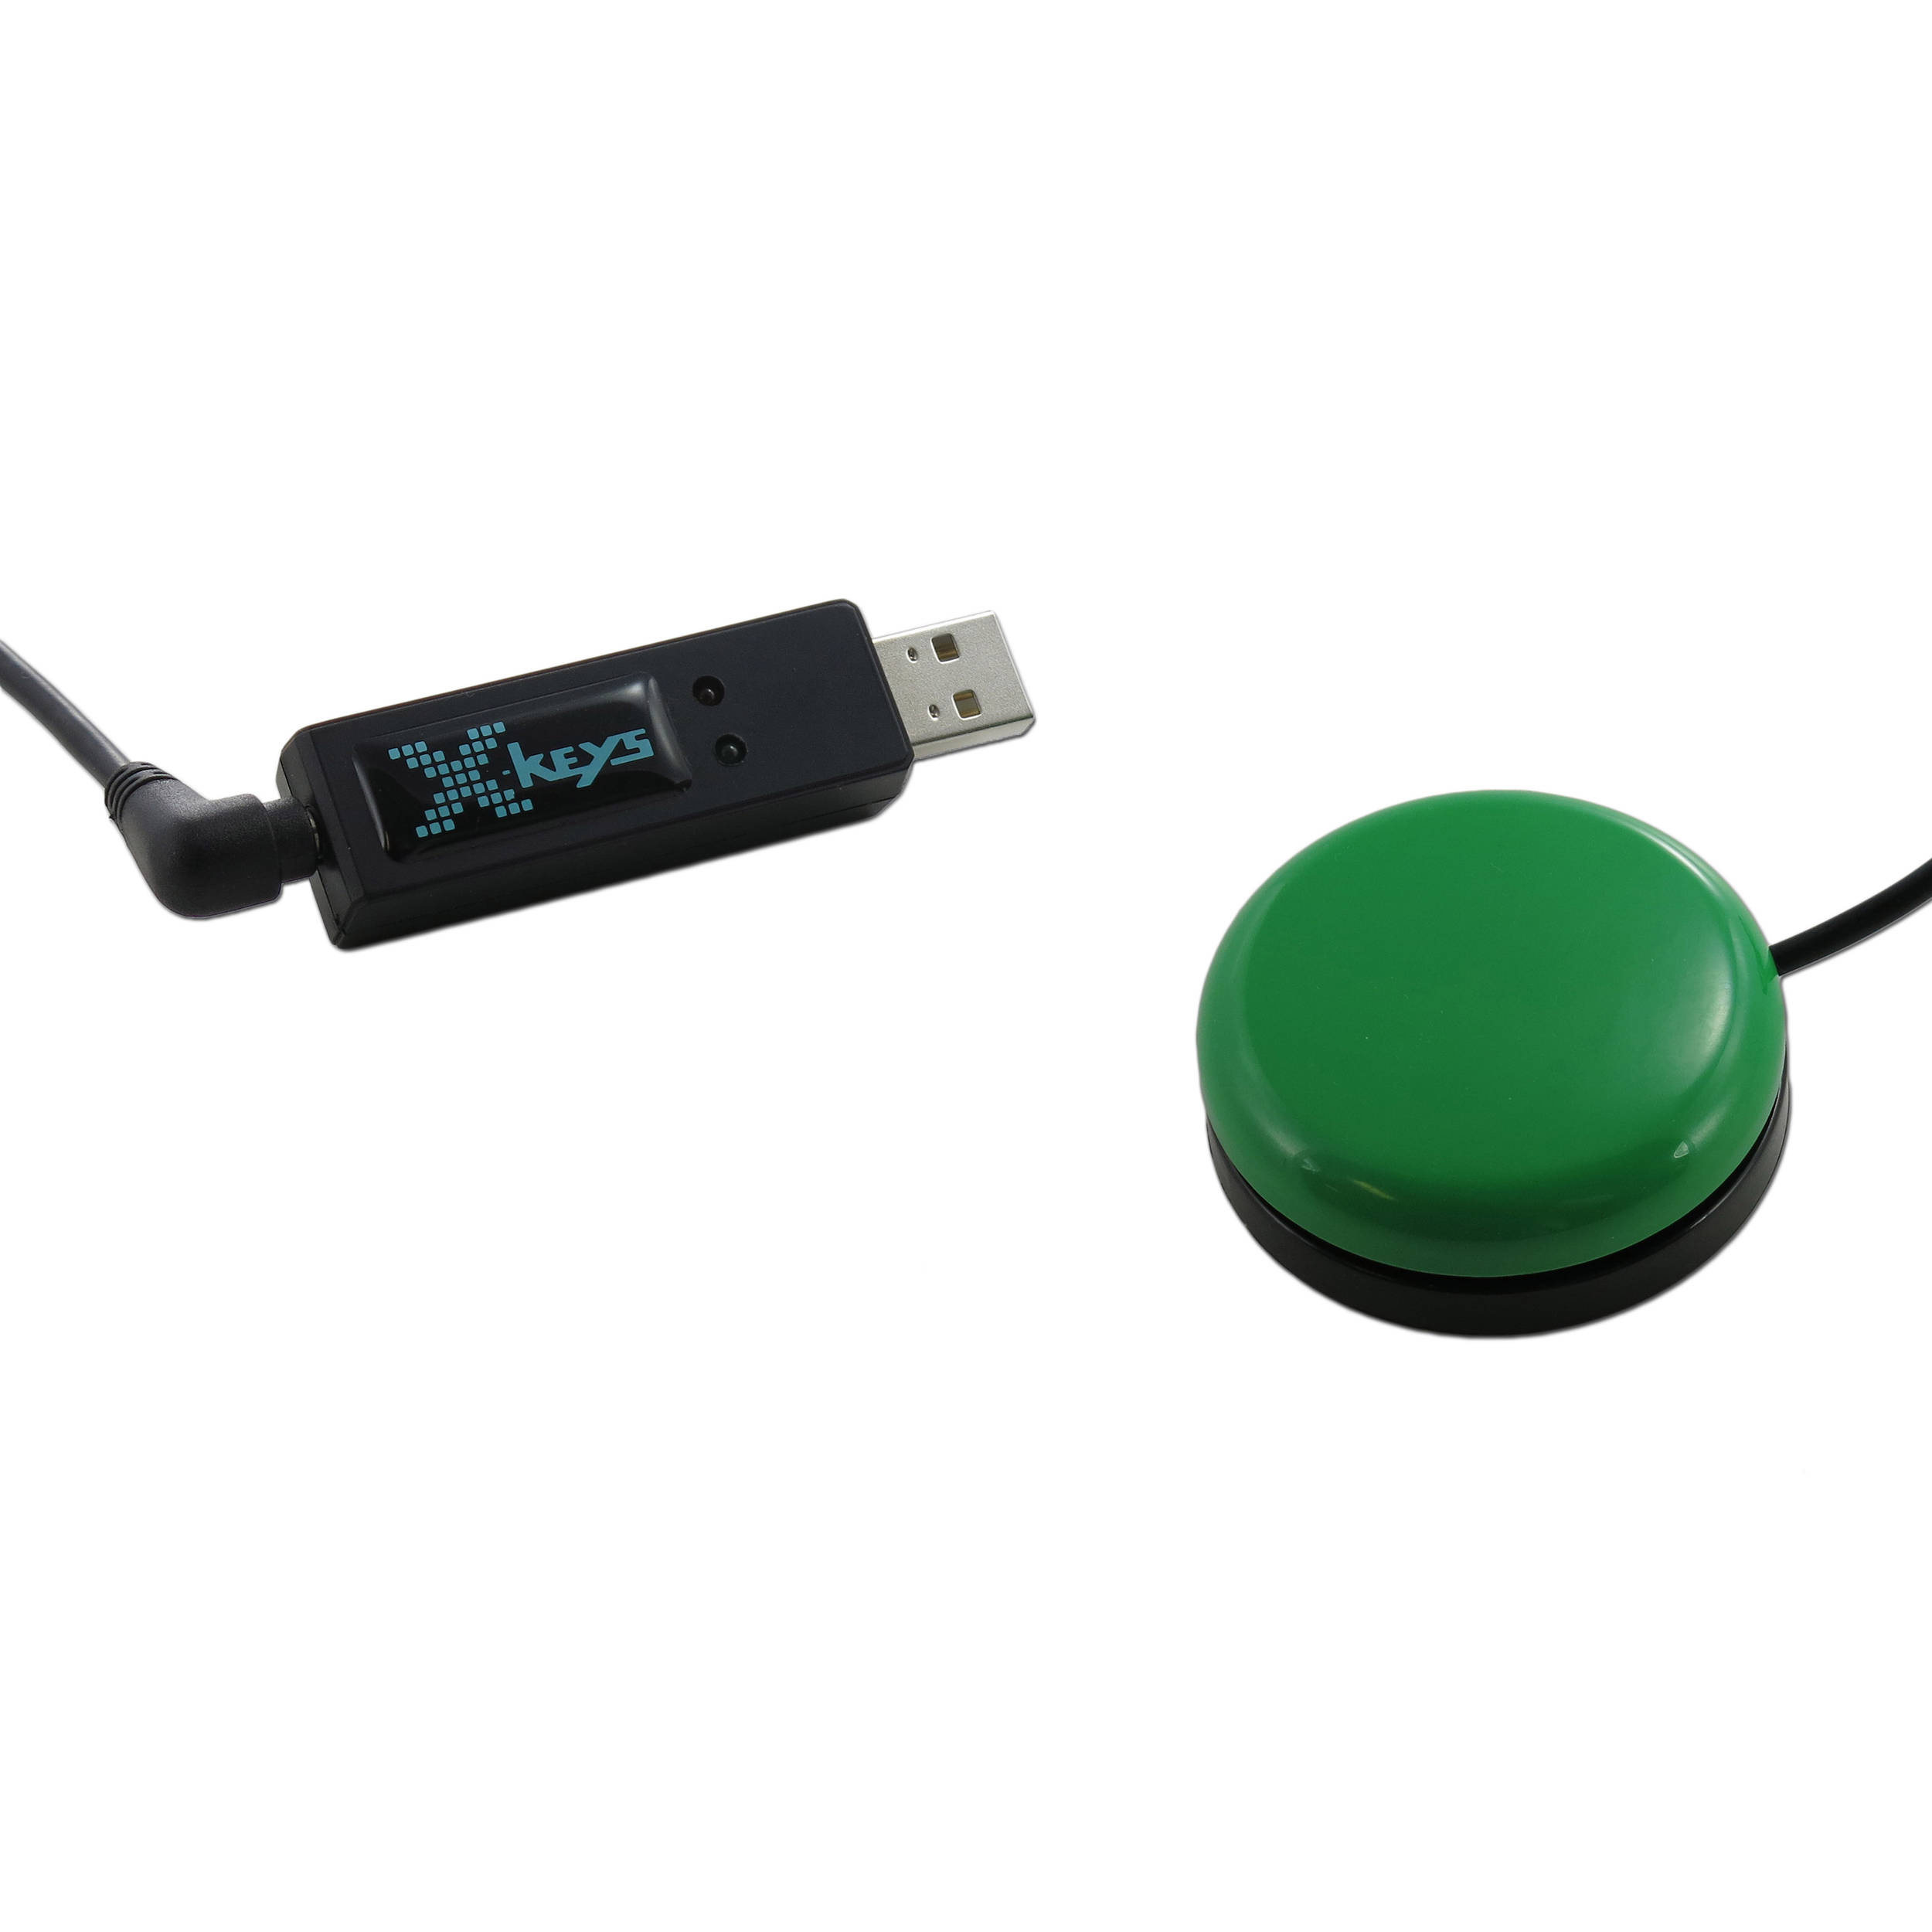 X-keys USB 3 Switch Interface with Green Orby Switch